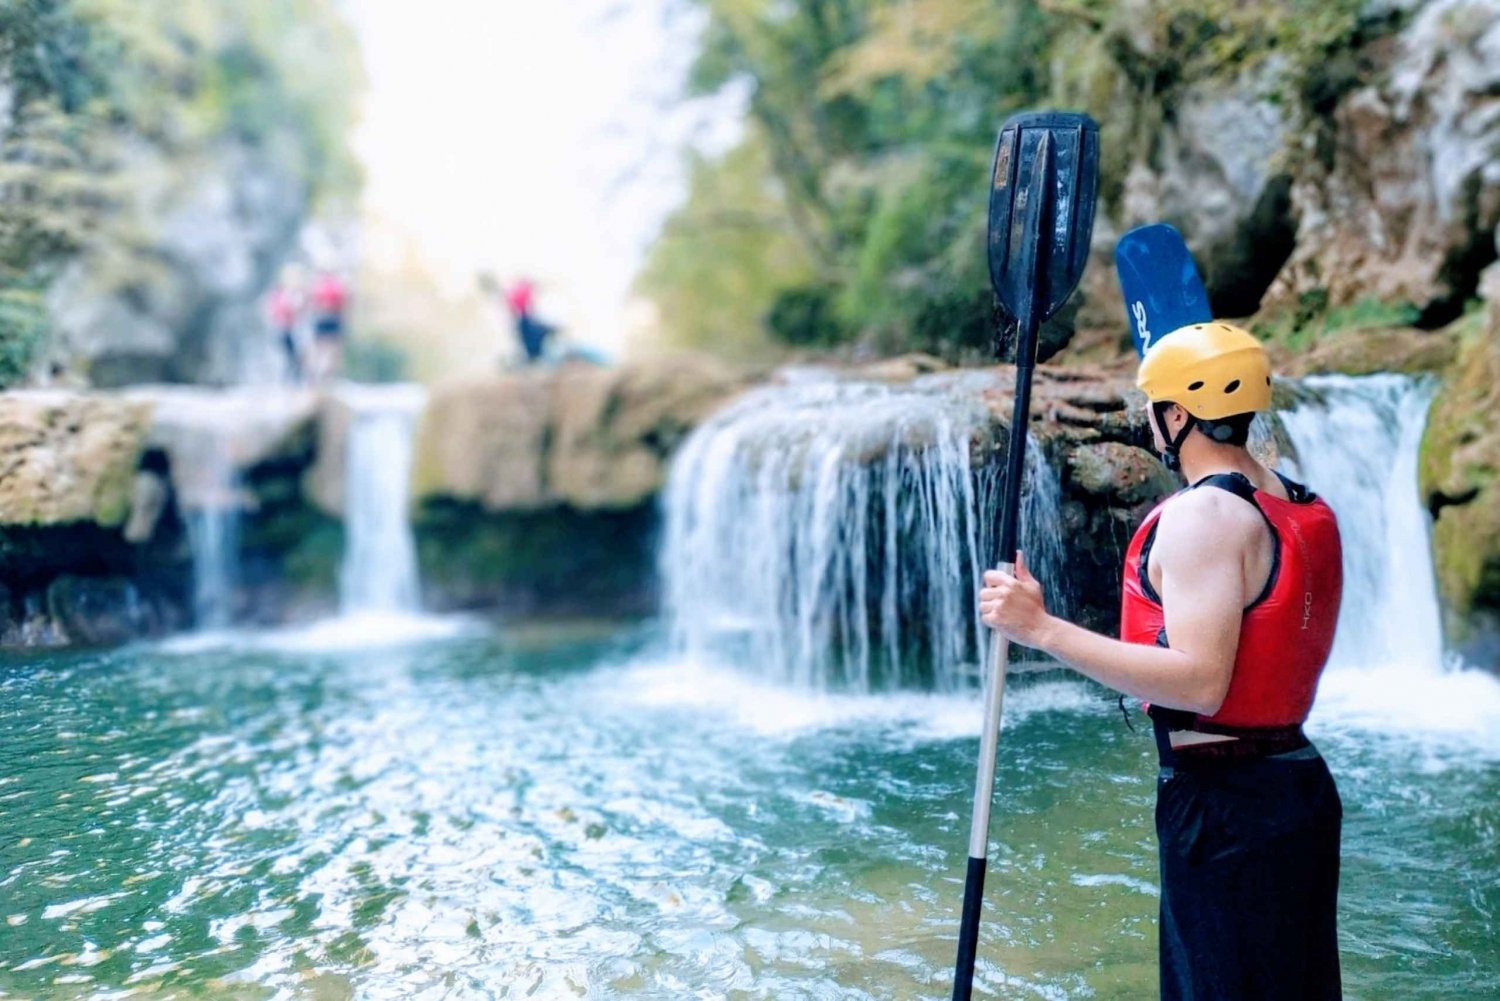 From Slunj: Mreznica Kayaking Adventure